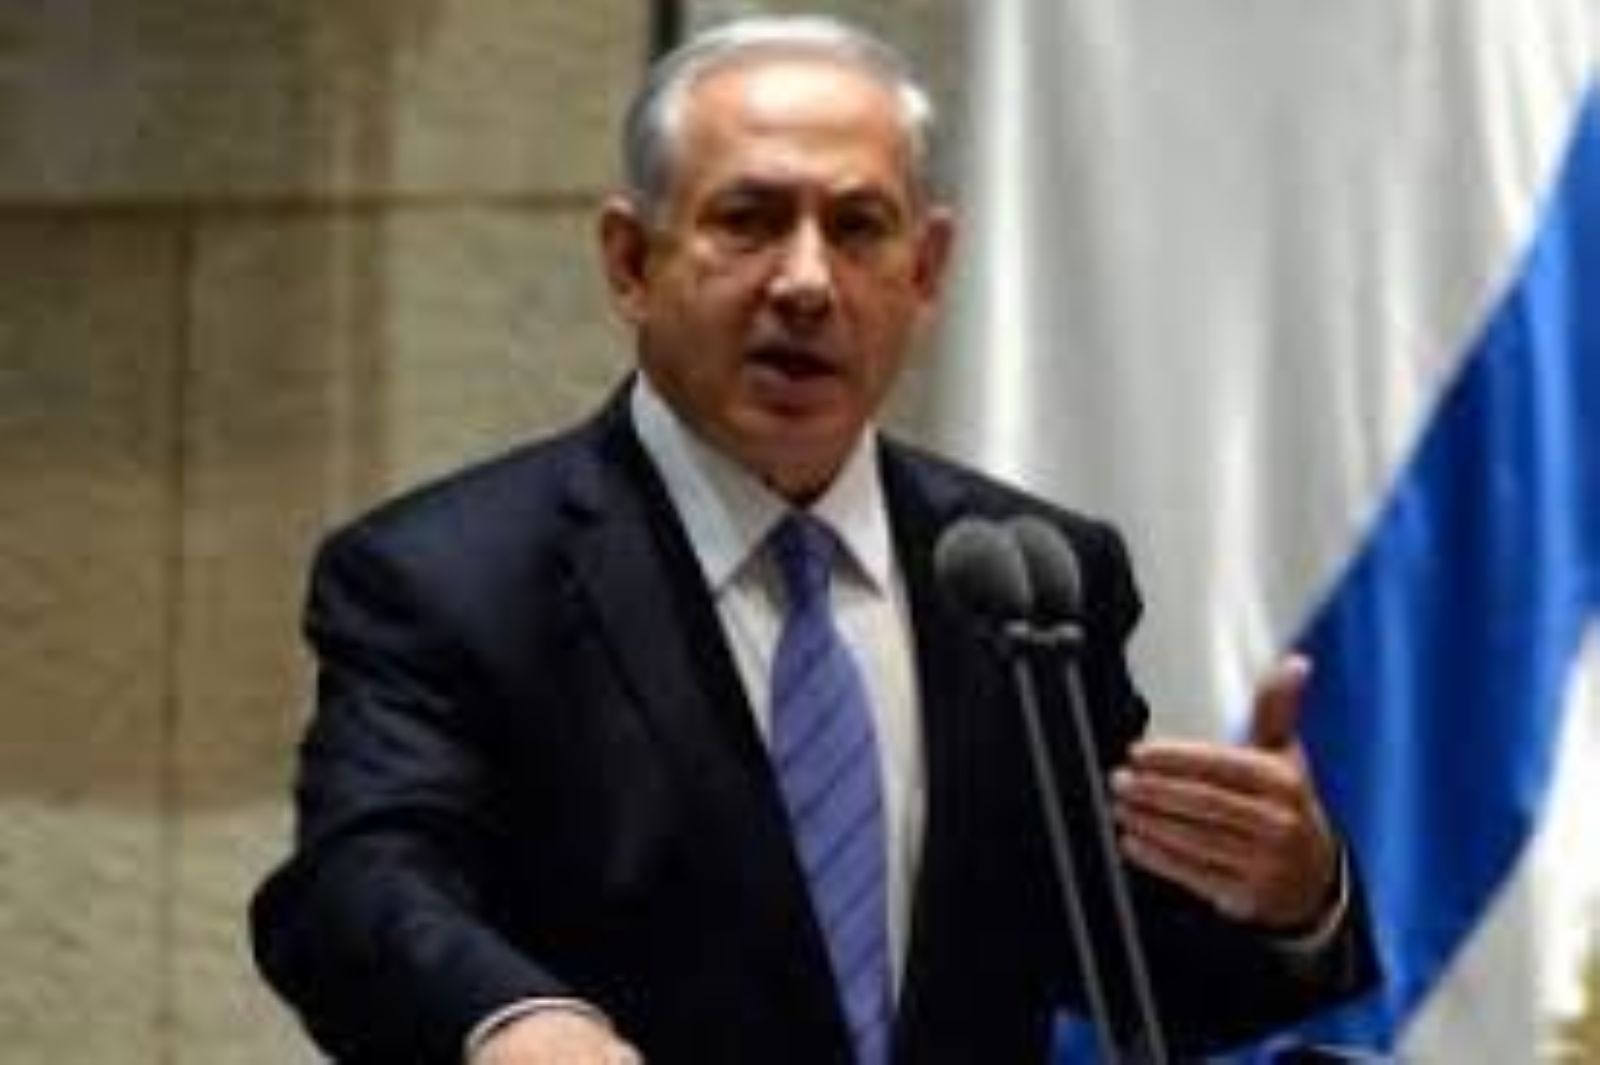 Israel will not slow settlement construction to kick-start peace talks